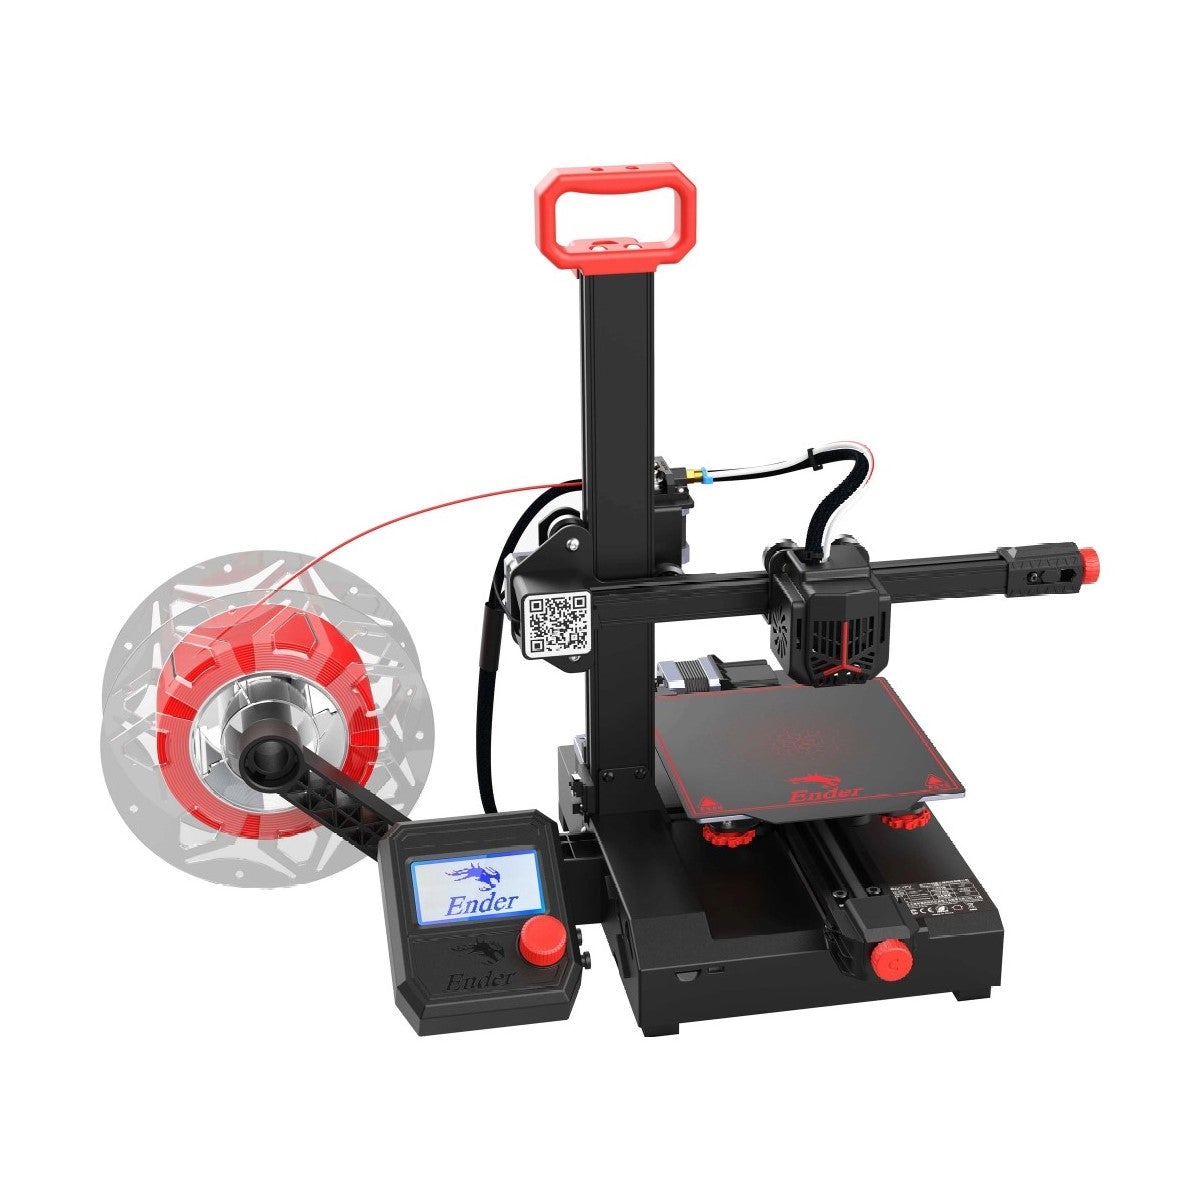 Creality 3D® Ender 2 Pro 3D Printer (165*165*180mm Print Size) Portable & Lightweight